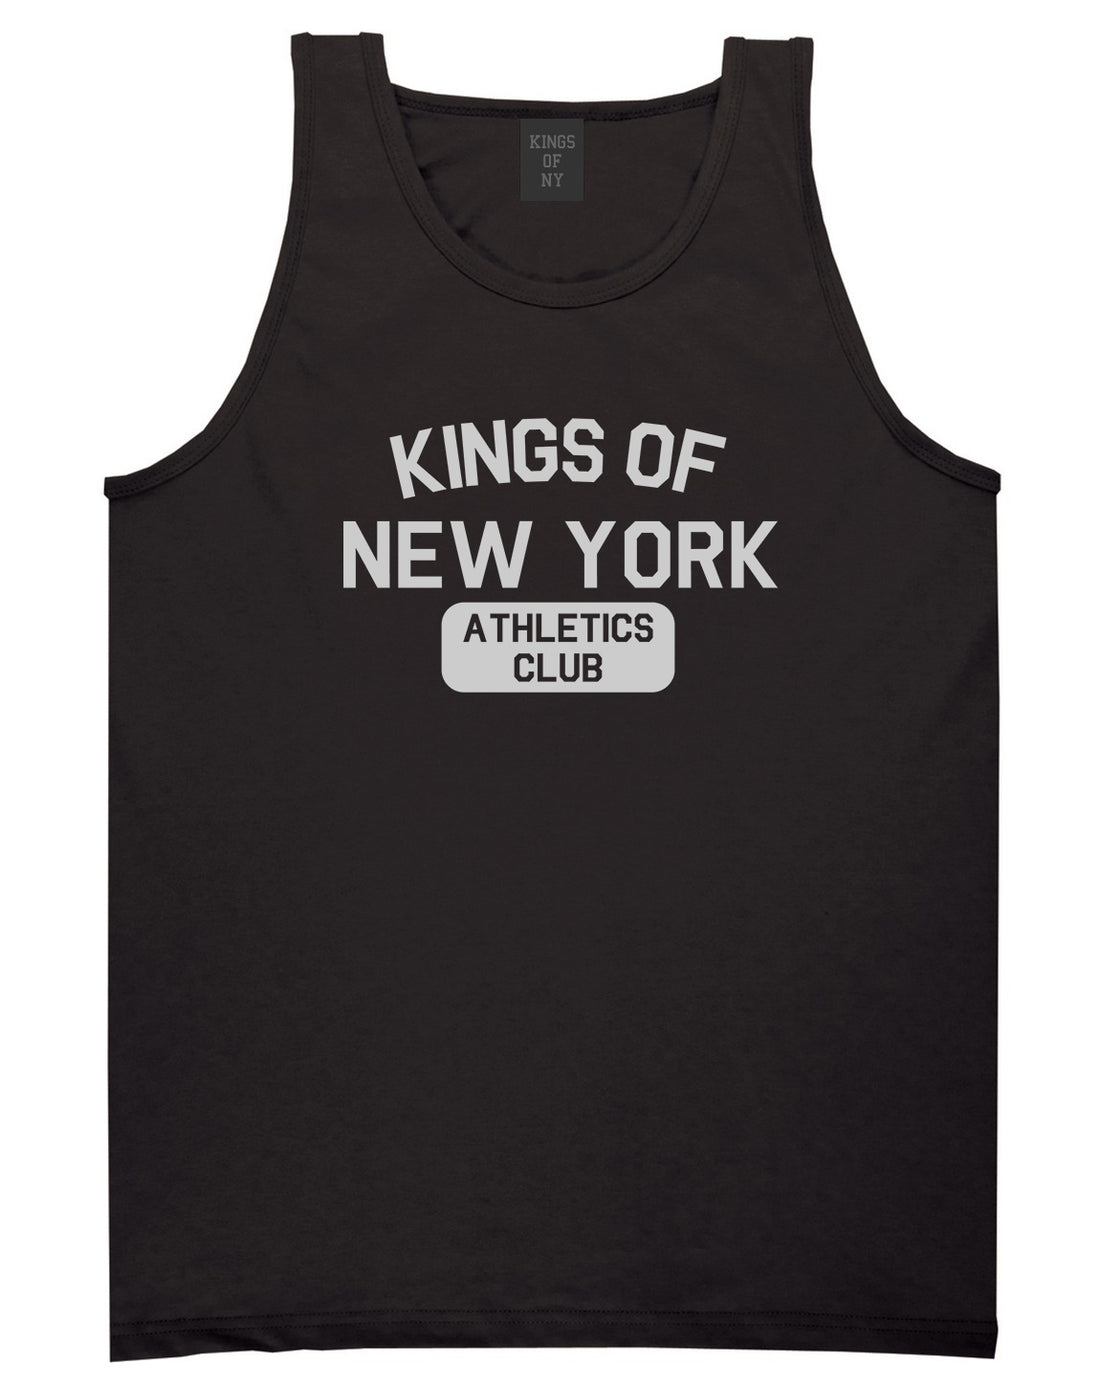 Kings Of New York Athletics Club Mens Tank Top Shirt Black